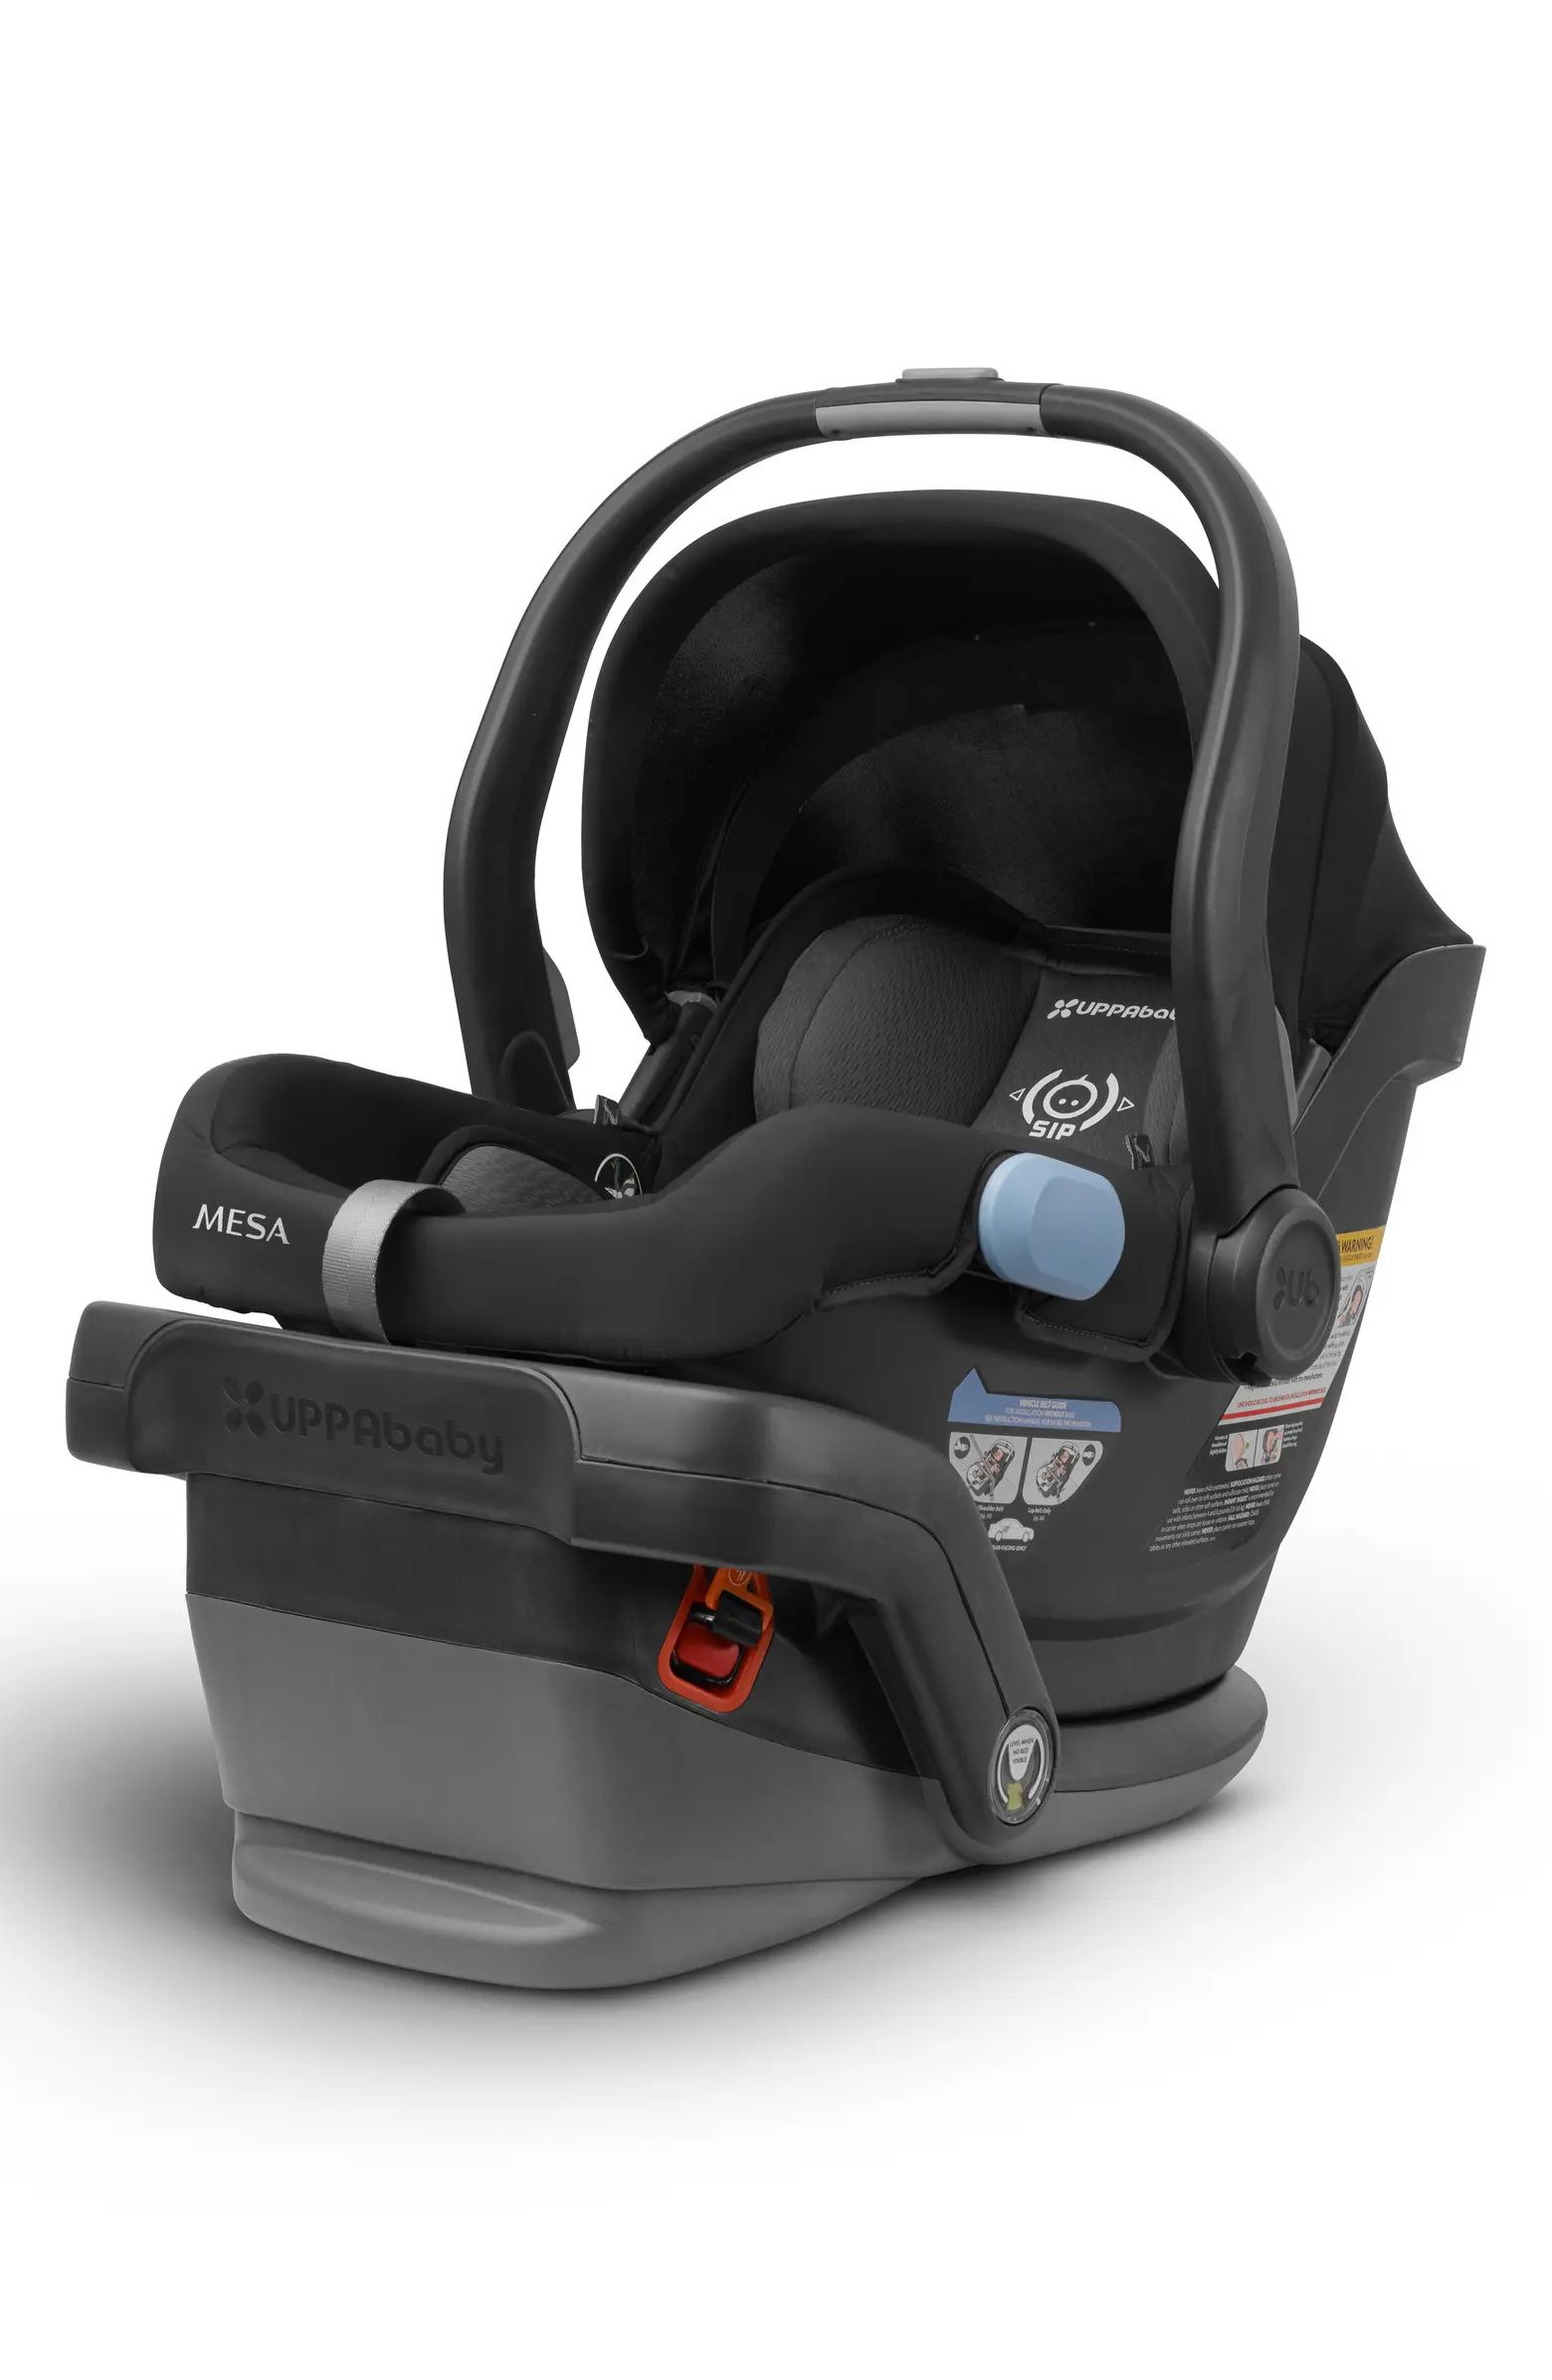 2017 MESA Infant Car Seat | Nordstrom